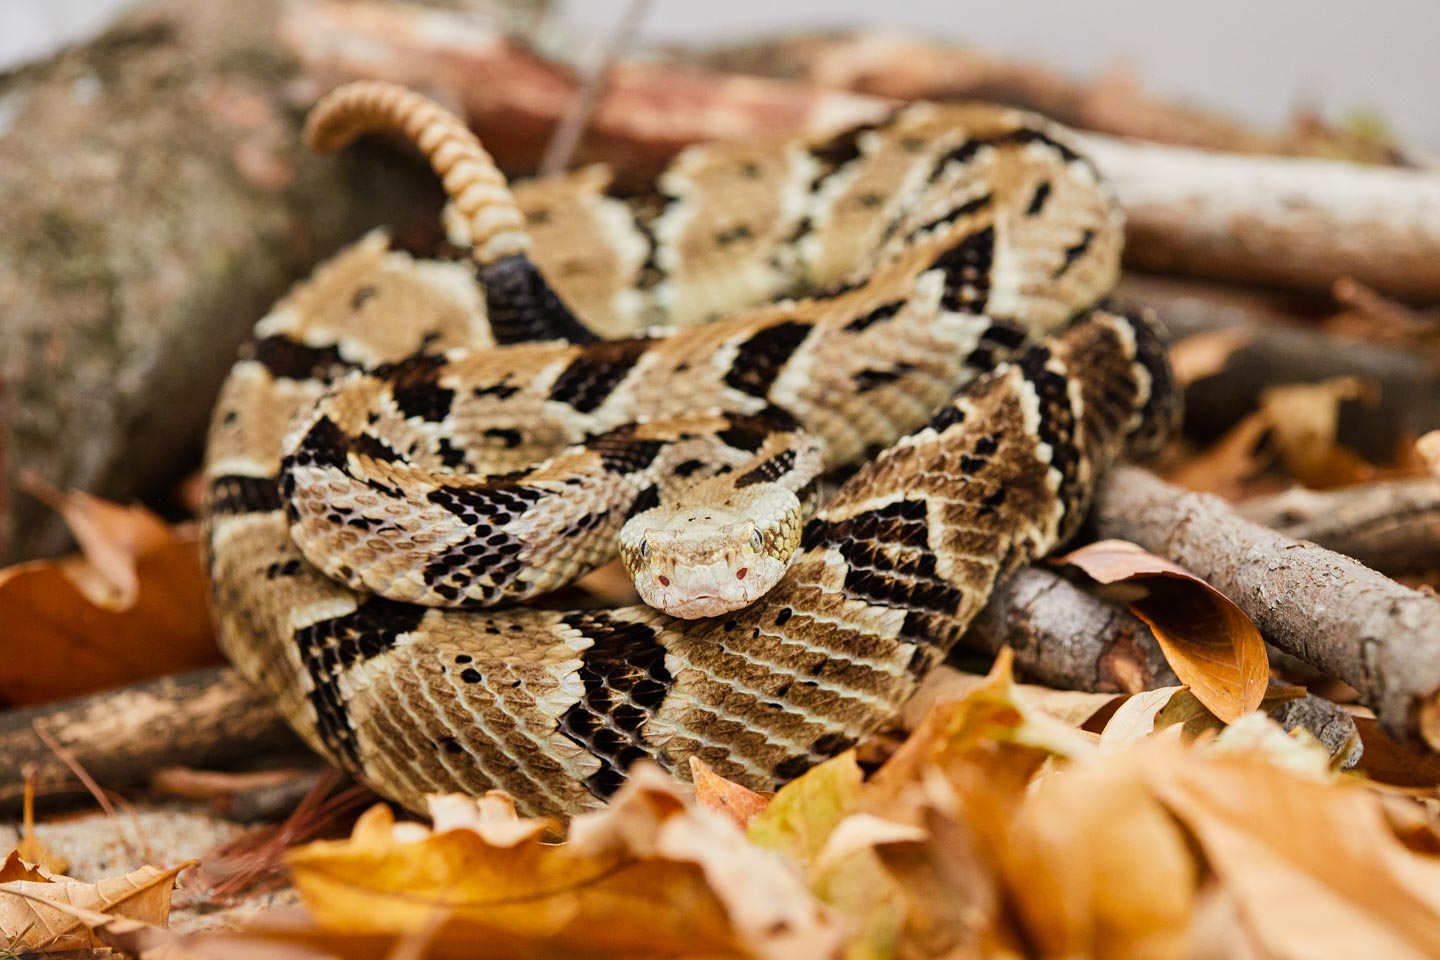 Read More: Timber Rattlesnake